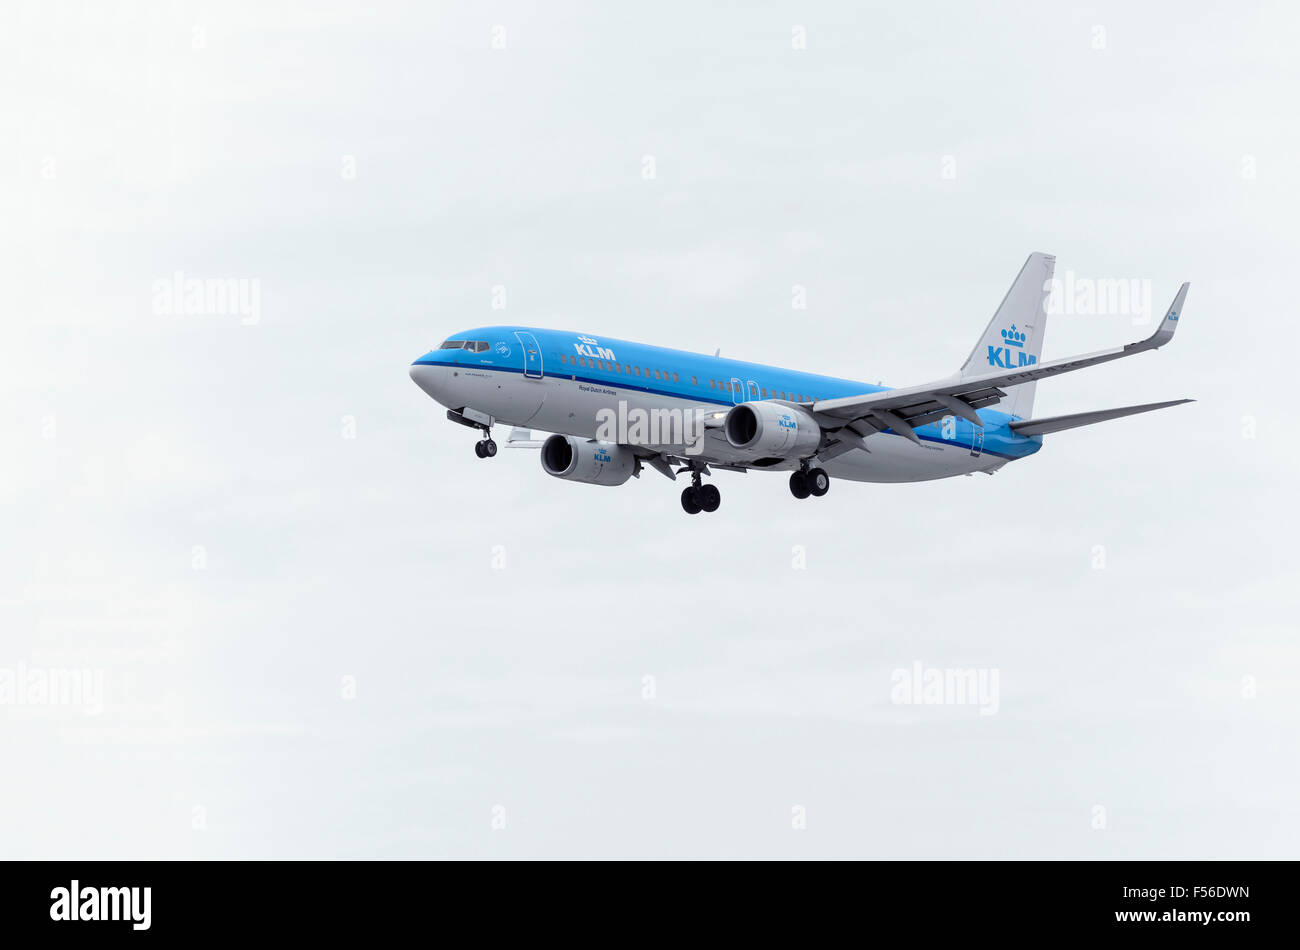 Flugzeug - Boeing 737-8K 2-- KLM-Airline, landet am Flughafen Madrid-Barajas - Adolfo Suarez. Stockfoto